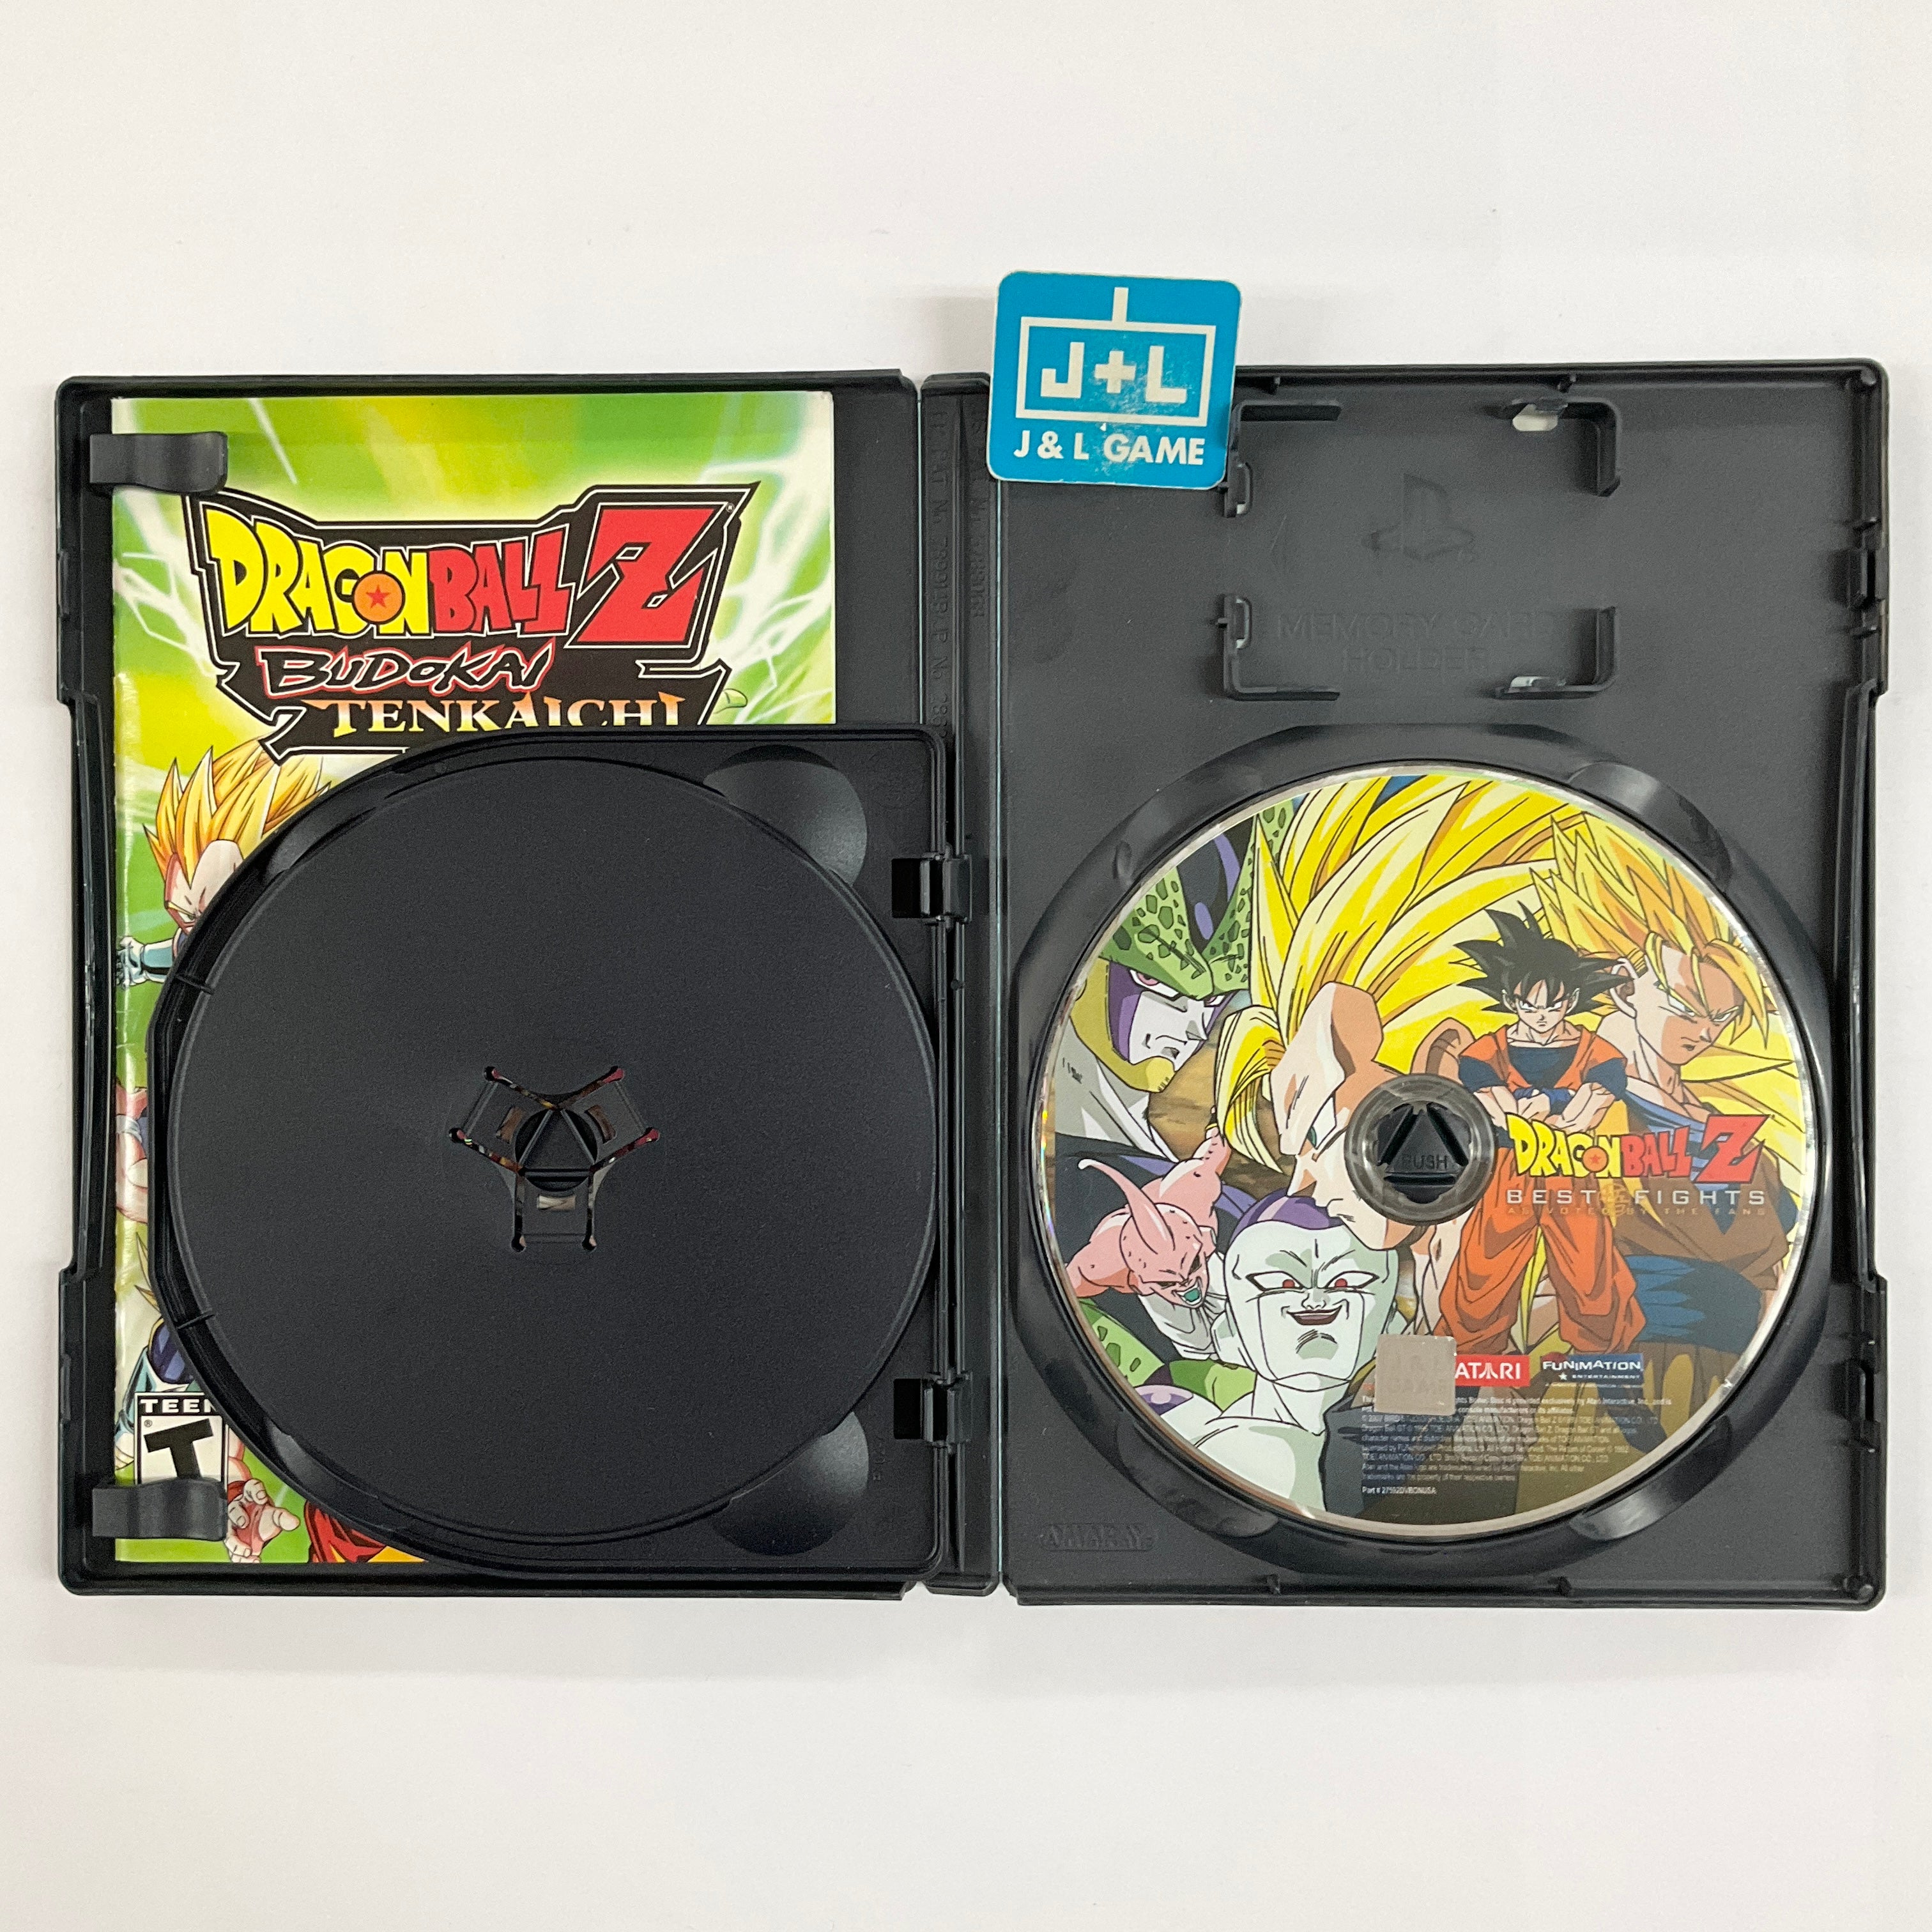 Dragon Ball Z Budokai Tenkaichi 3 with Bonus Disc - (PS2) PlayStation 2 [Pre-Owned] Video Games Atari Inc.   